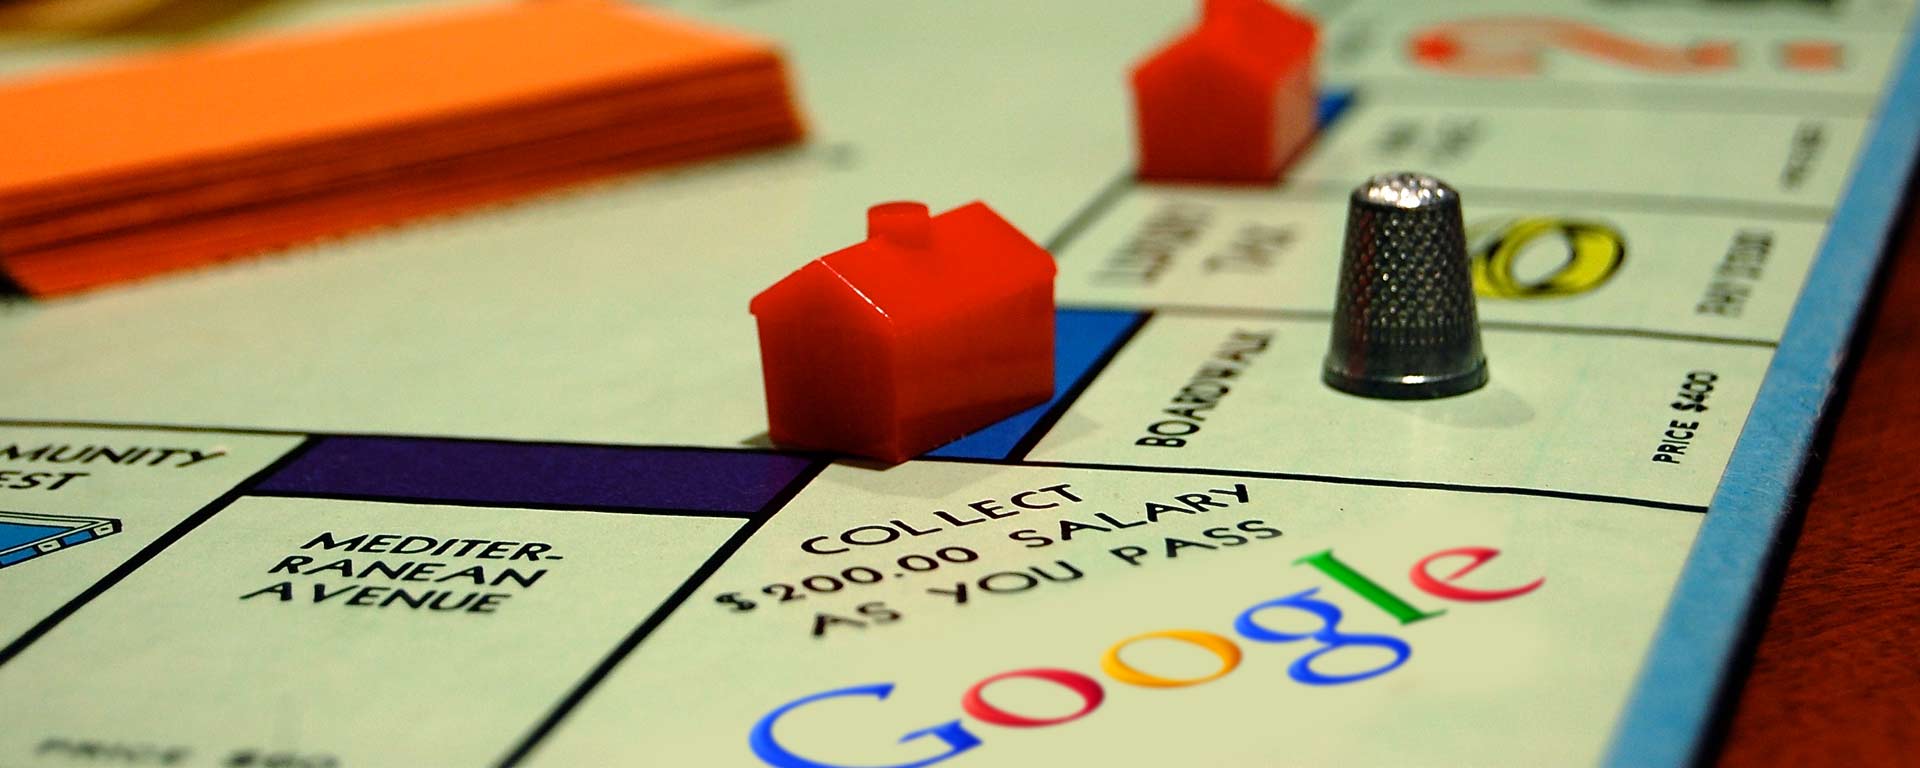 Google hotel monopoly